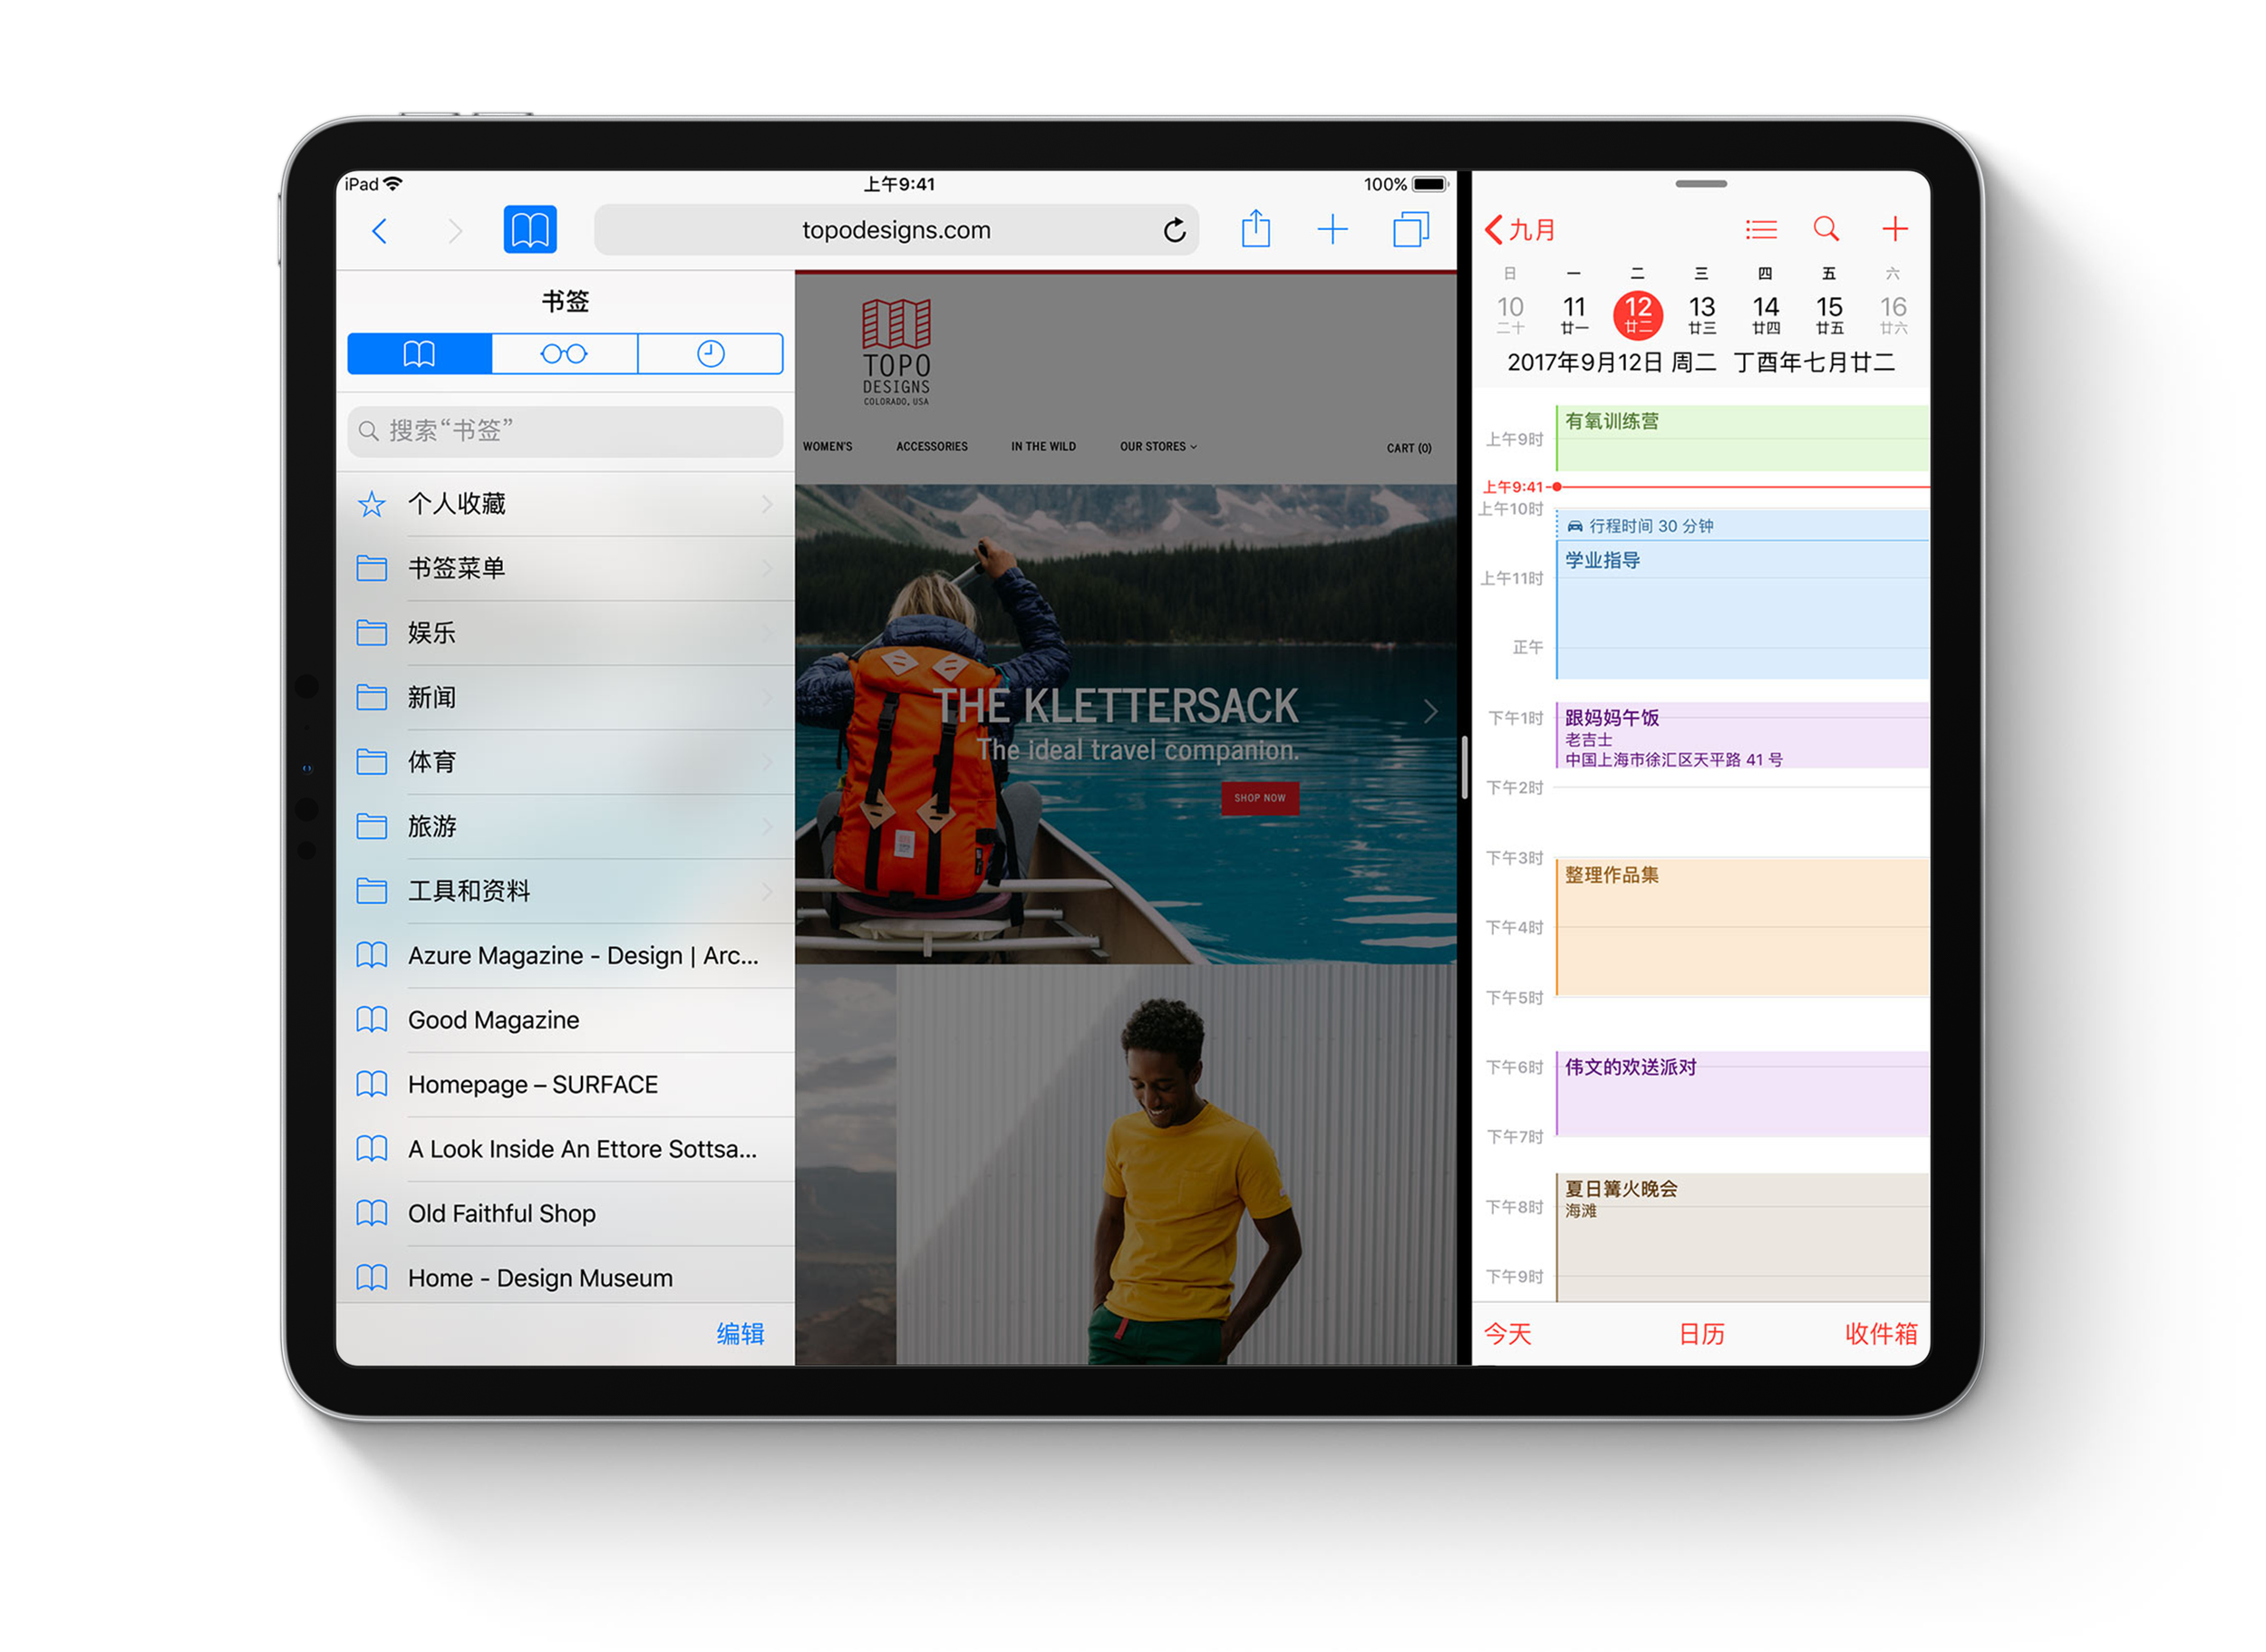 iPad OS: Safari Bookmark / Calendar